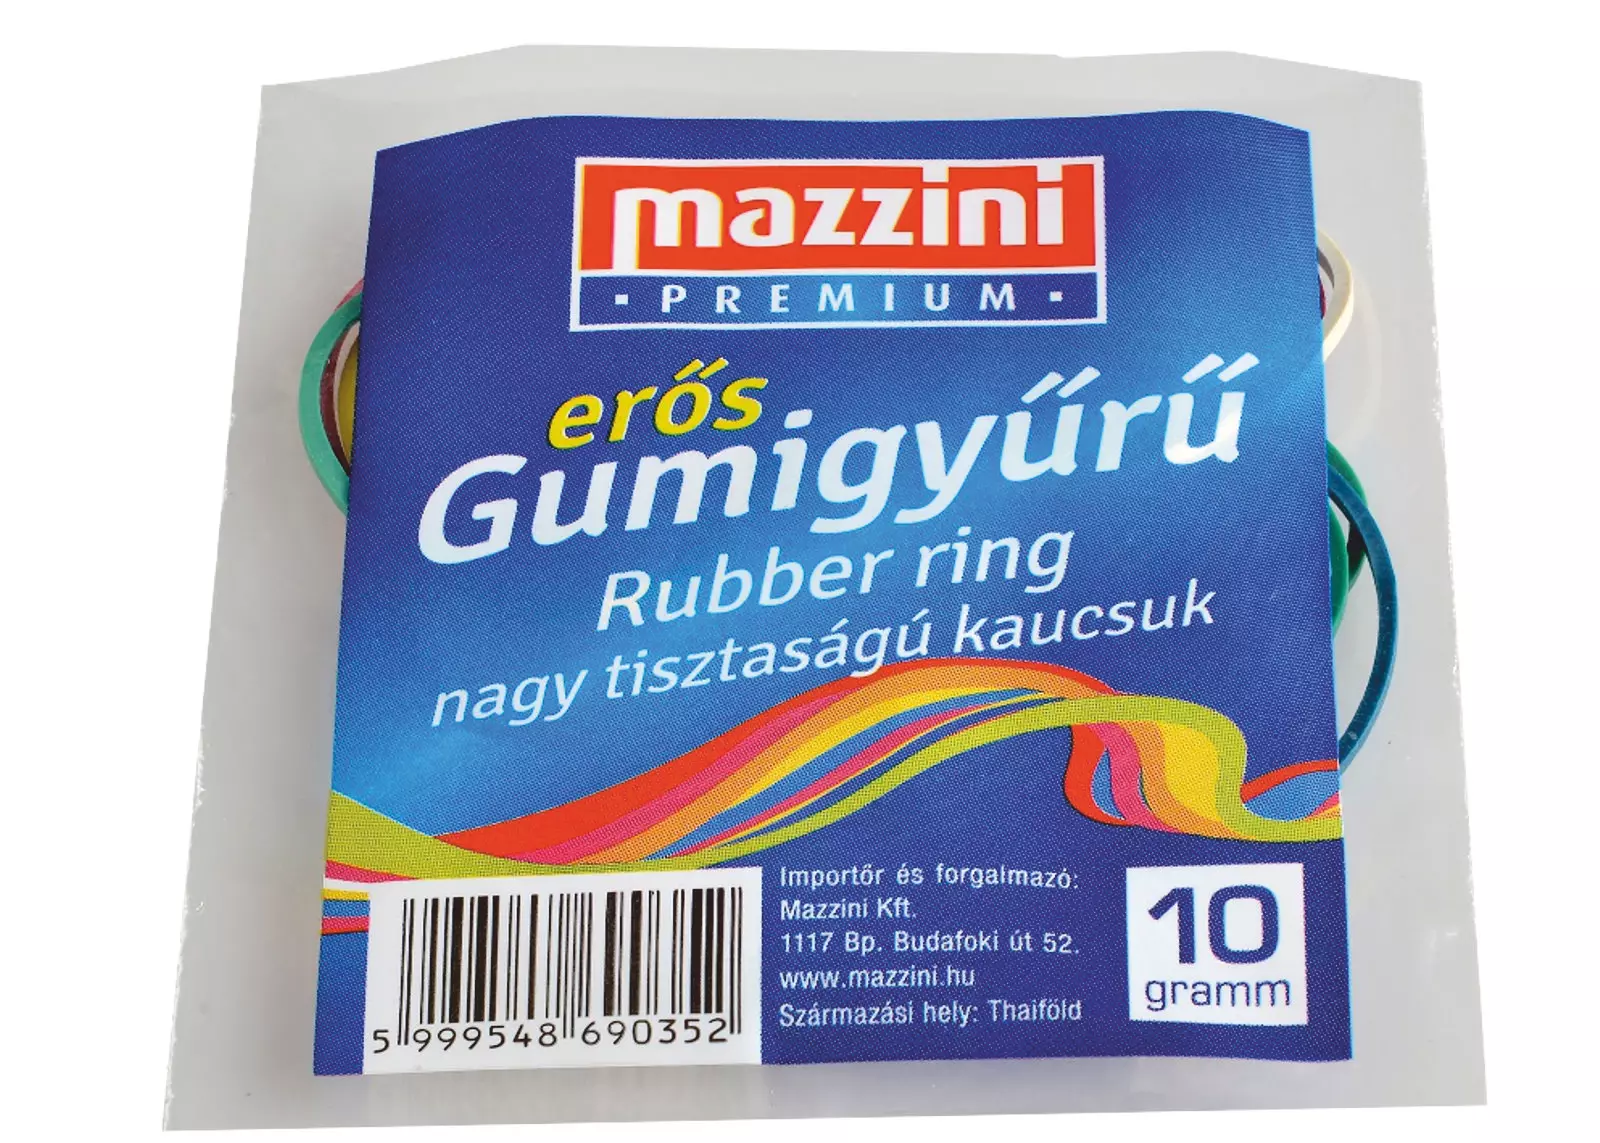 .Mazzini Gumigyűrű 10g prémium